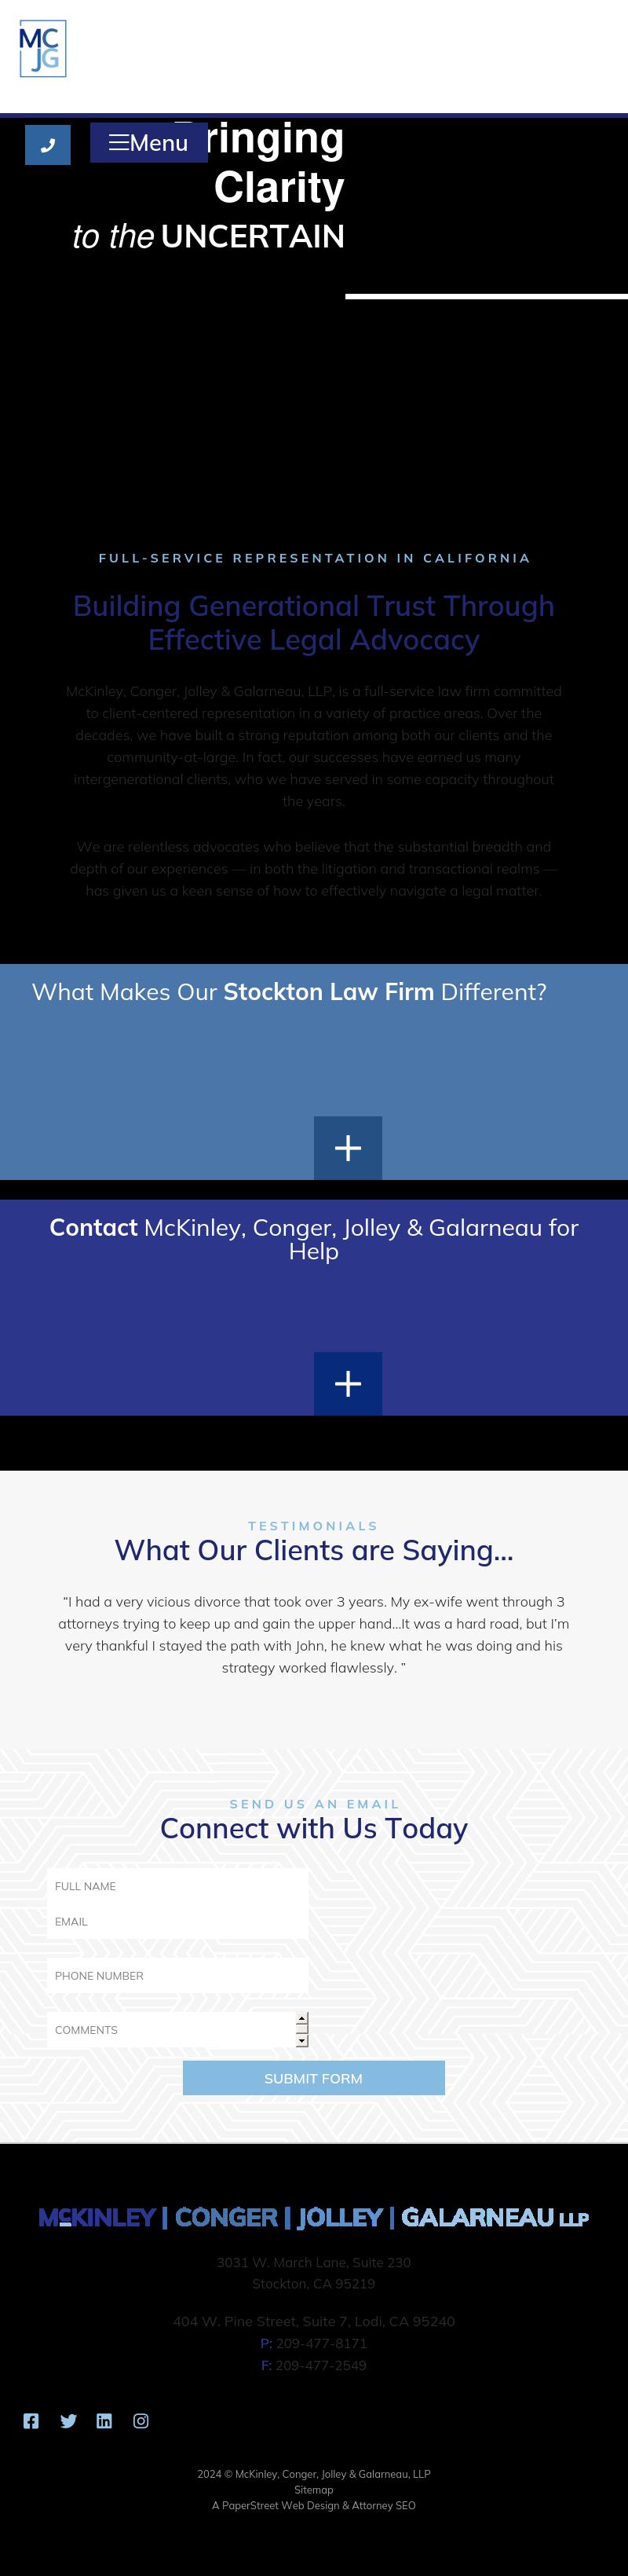 Shore Mckinley & Conger LLP - Stockton CA Lawyers